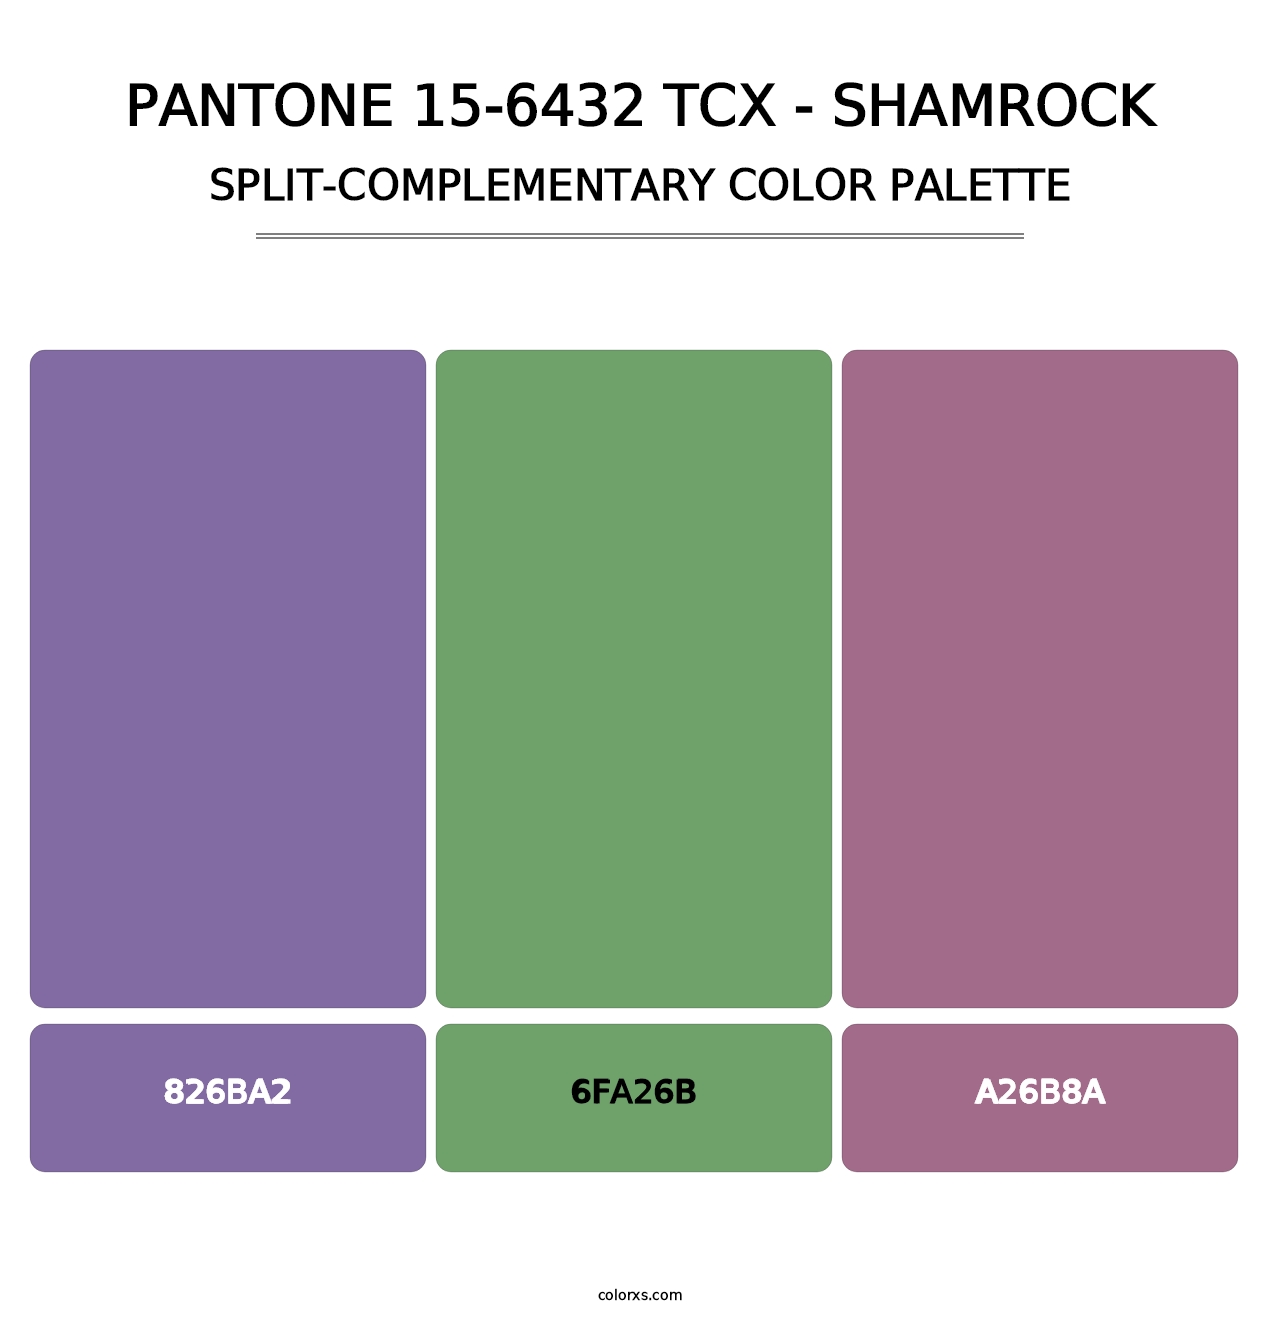 PANTONE 15-6432 TCX - Shamrock - Split-Complementary Color Palette